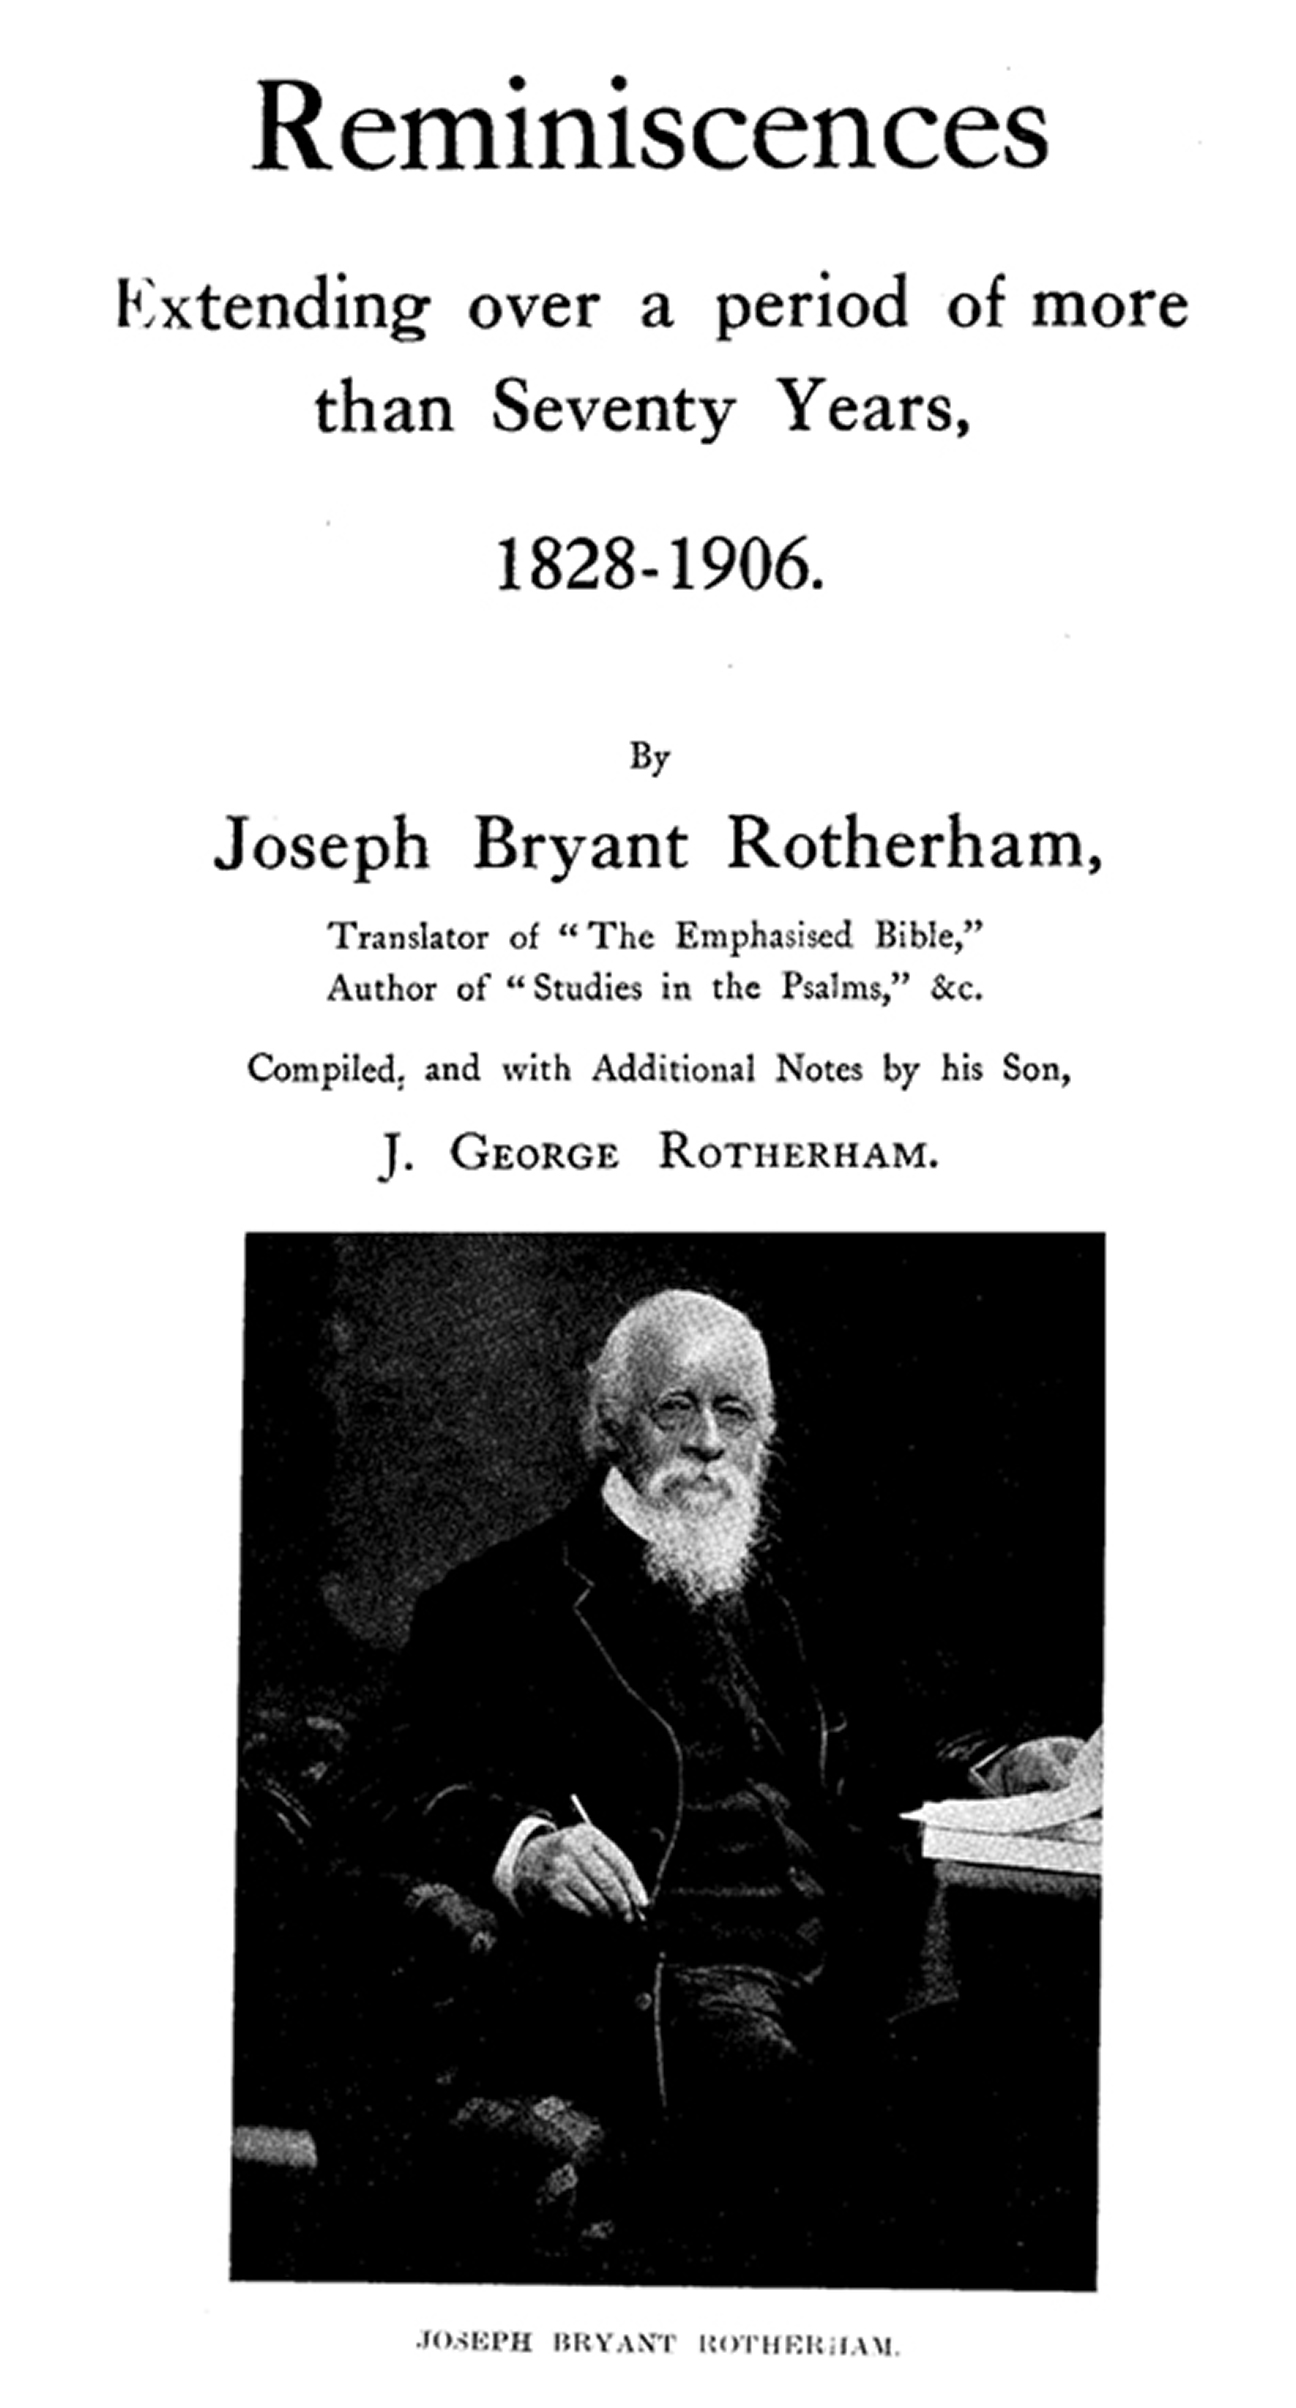 Reminiscenes by Joseph Rotherham
